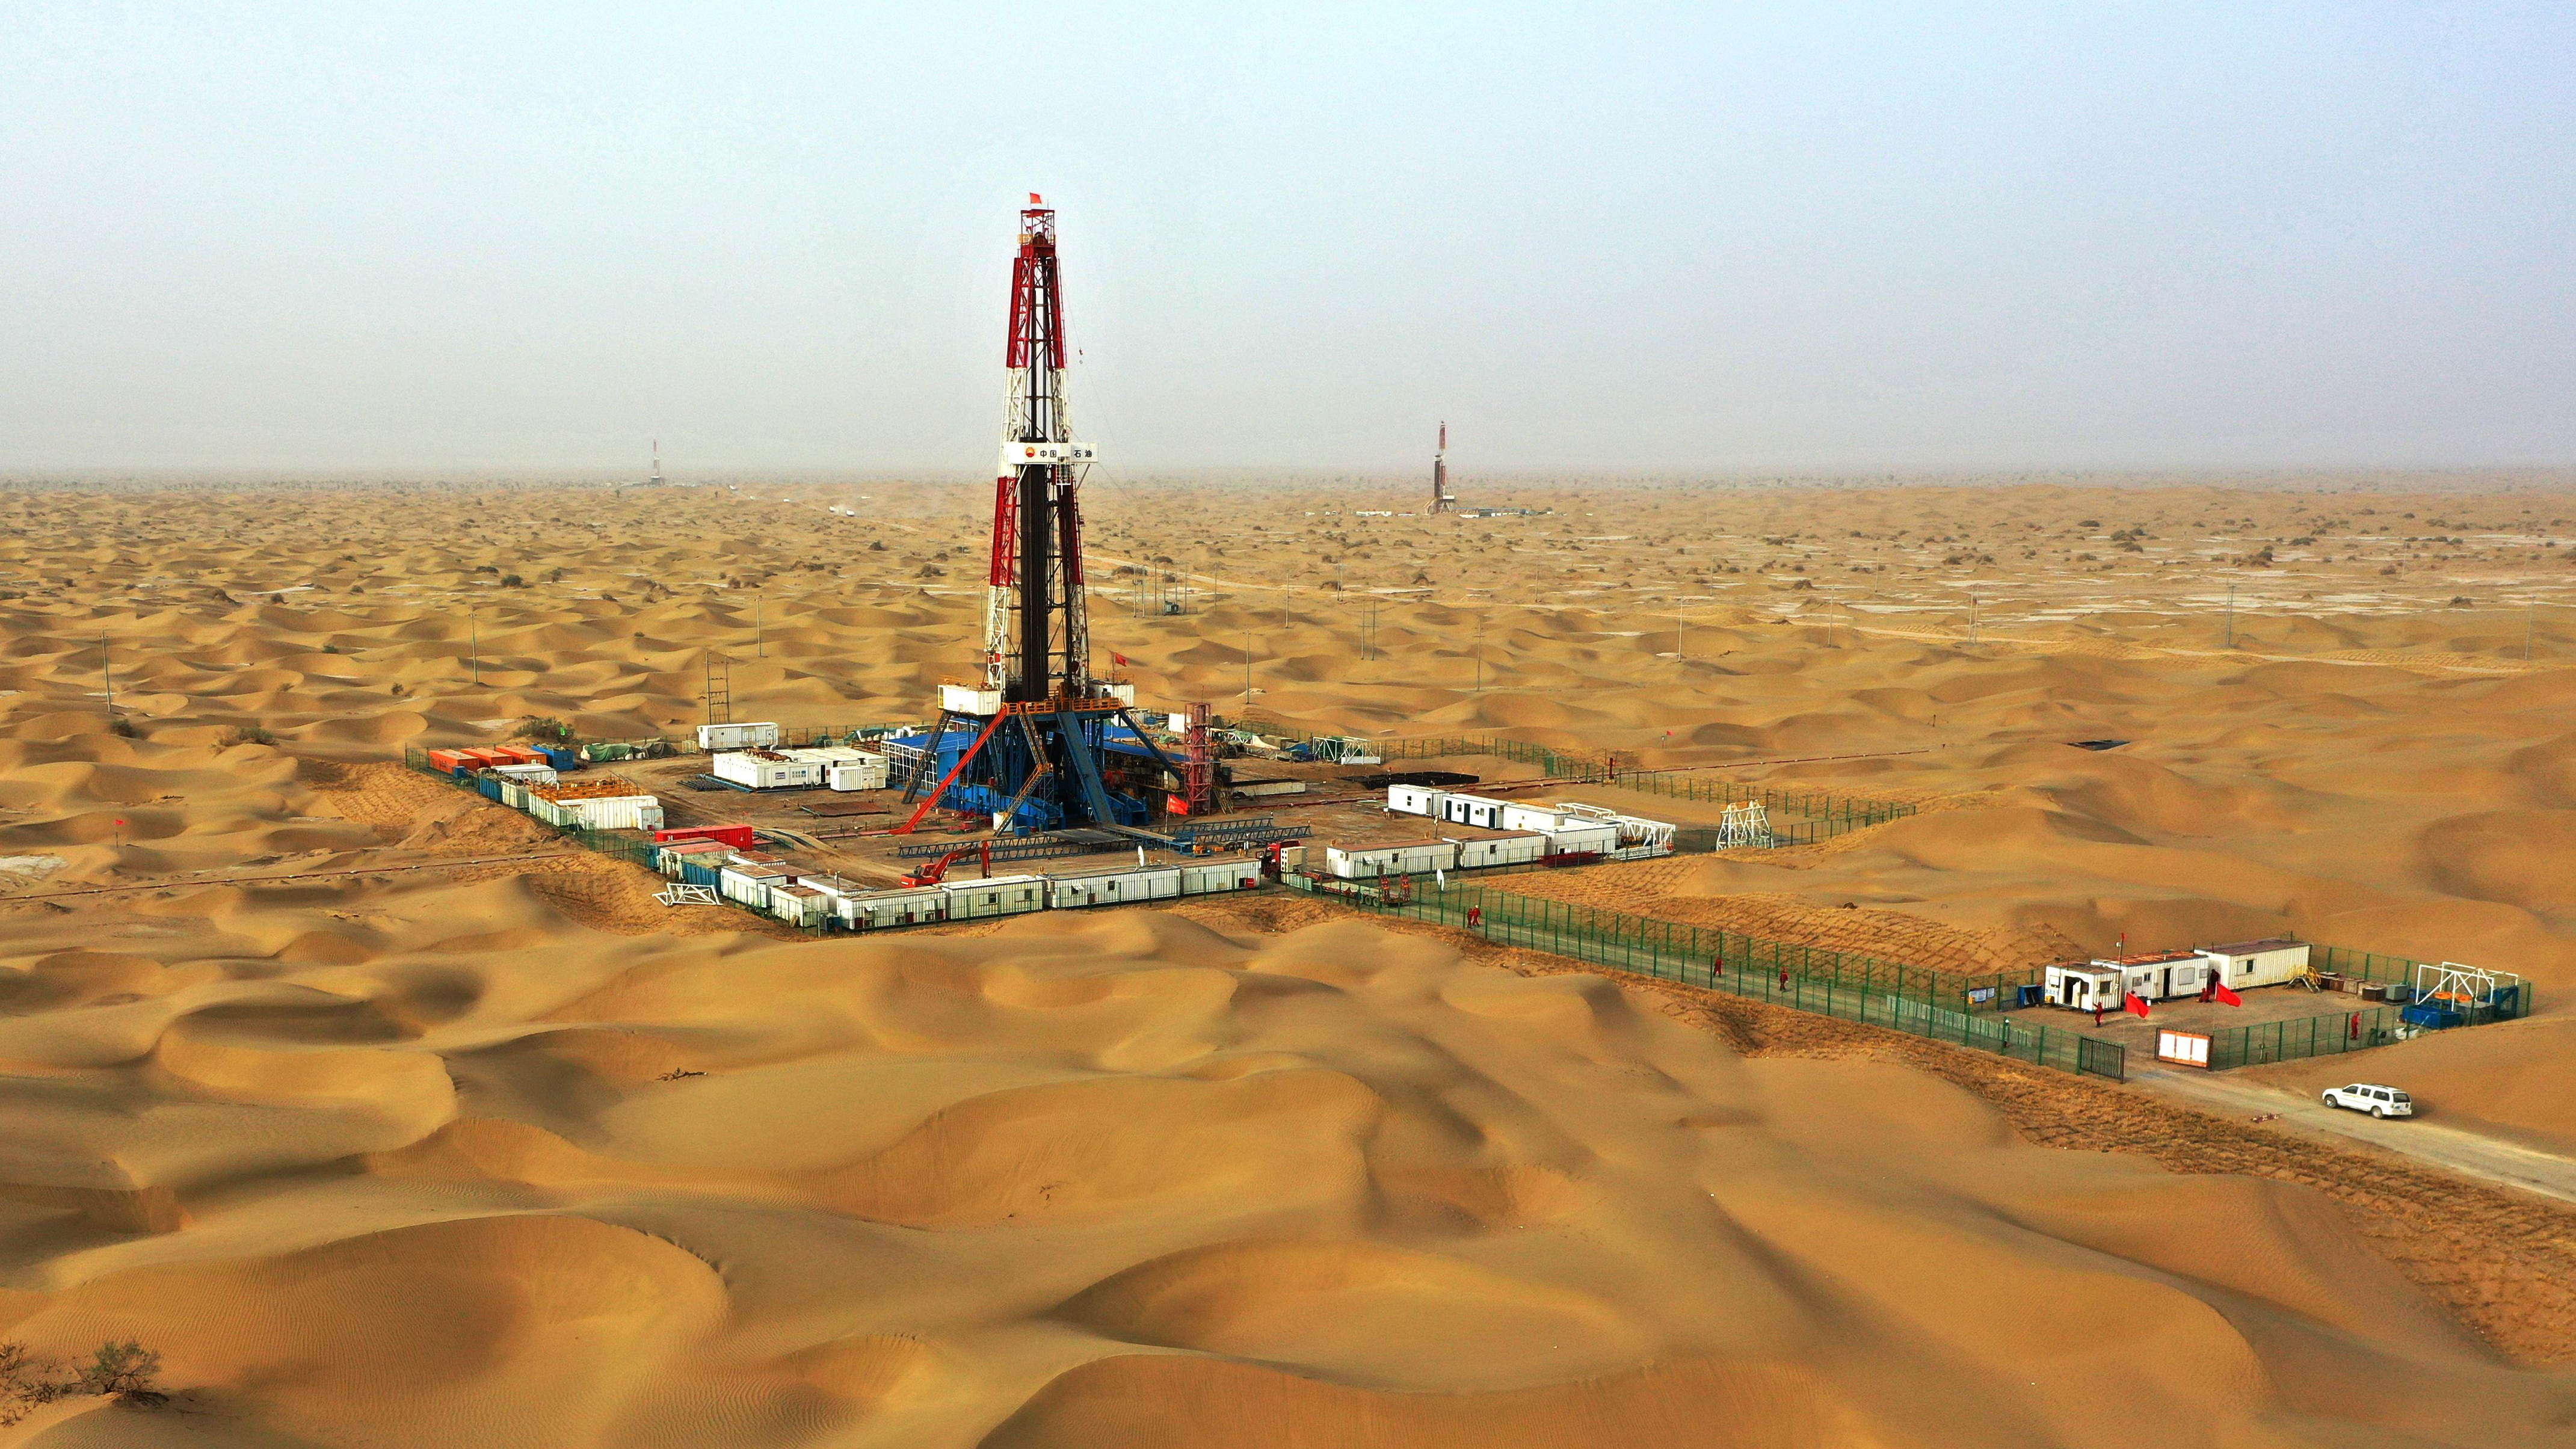 A view of the Tarim Oilfield in the Tarim Basin of northwest China's Xinjiang Uygur Autonomous Region. /China Media Group